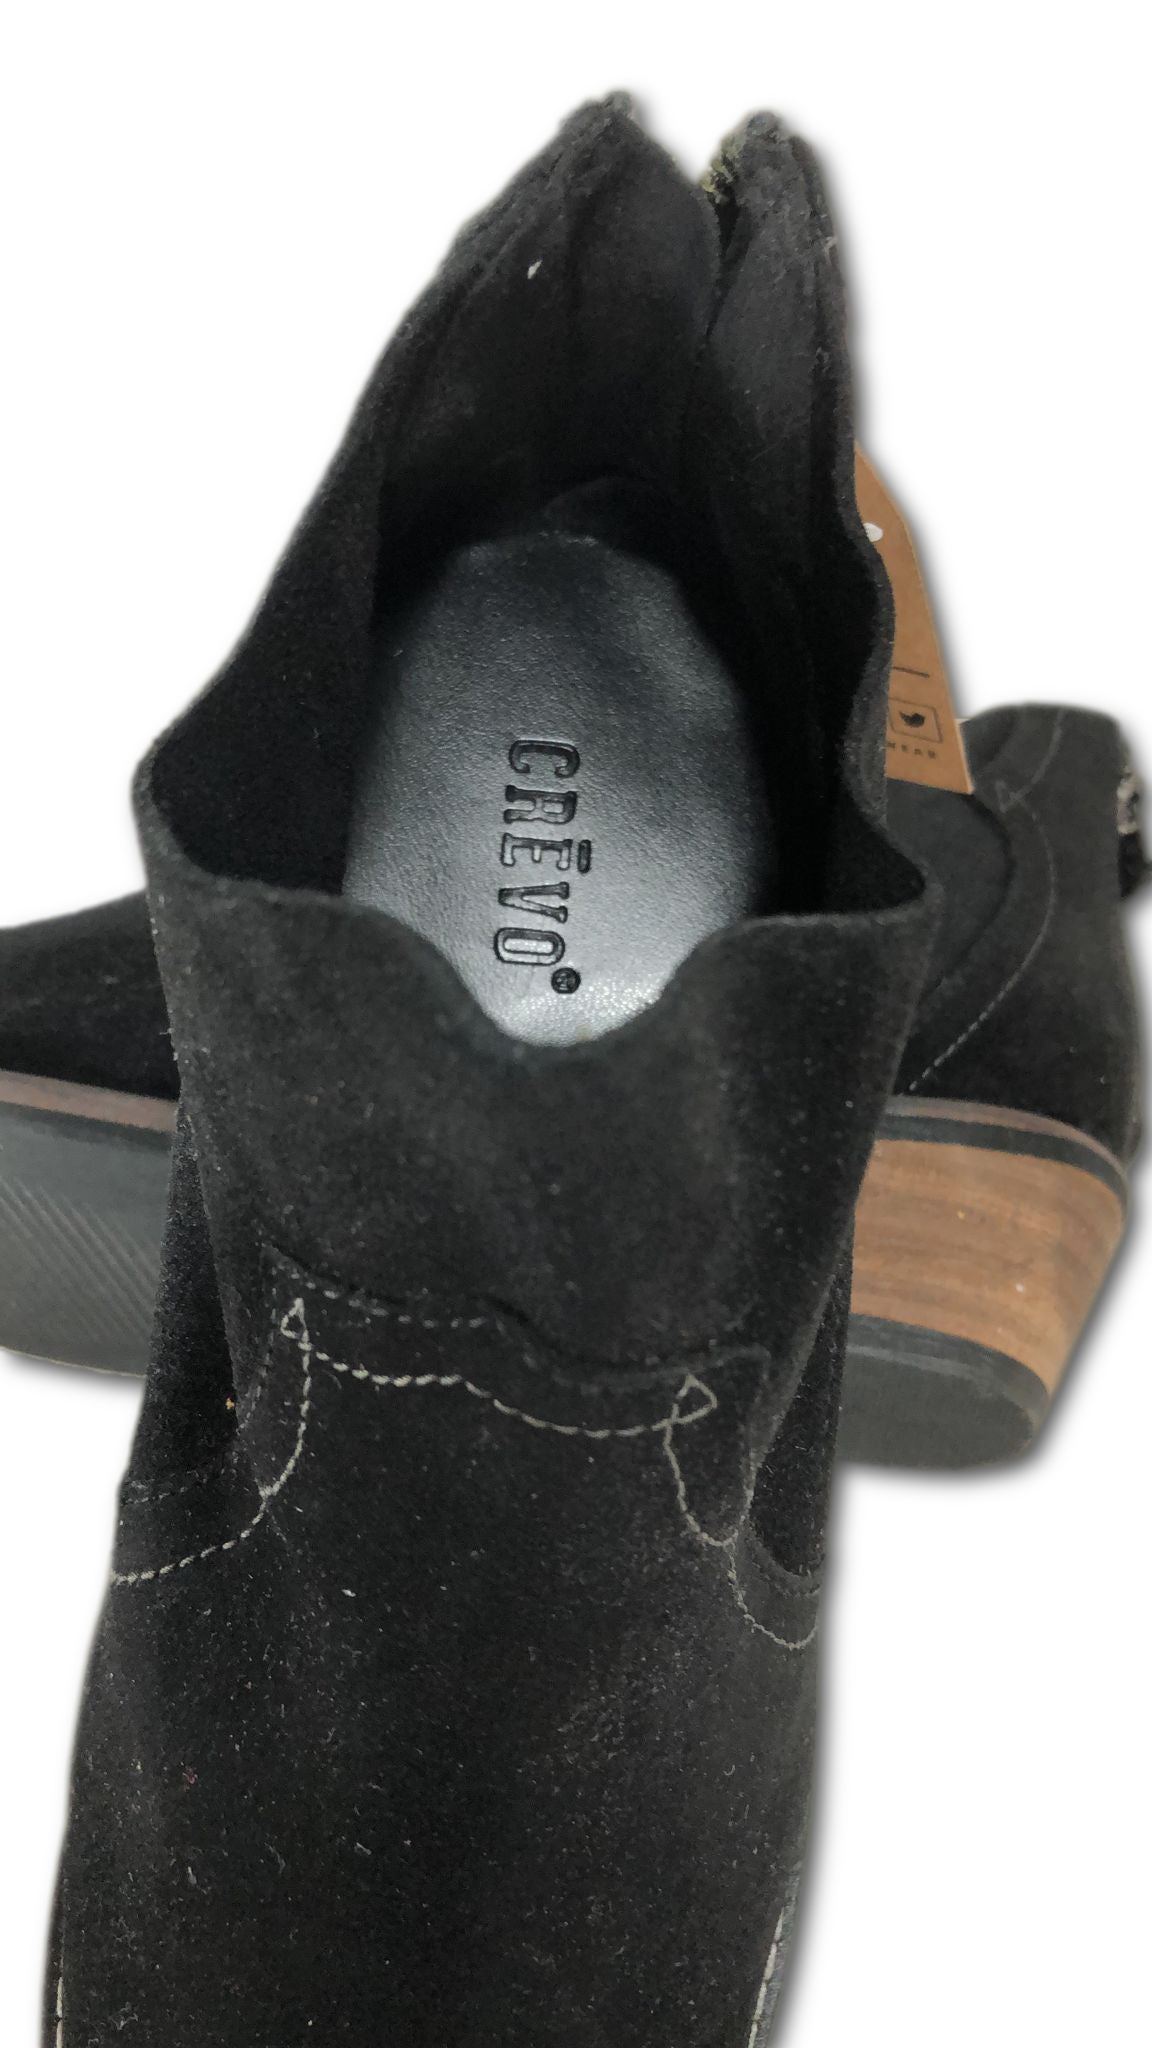 Crevo Women's Fashion Boot, Black, 6.5